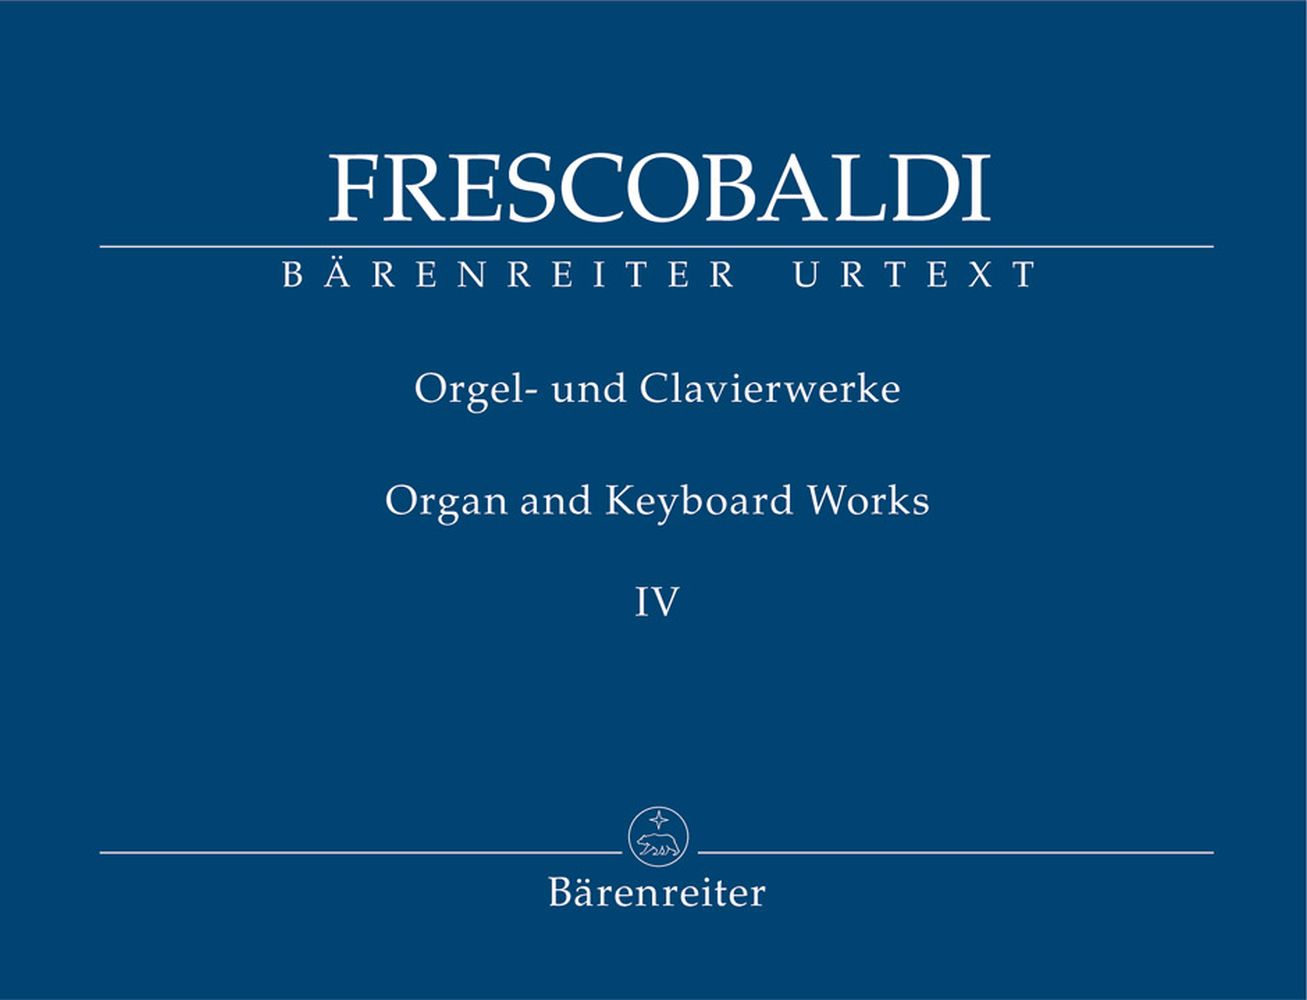 Organ and Keyboard Works 4, Fiori musicali (Venice, Vincenti, 1635) / Aggiunta from: Toccate d'Intavolatura..., Libro P.º (Rom, Borboni, 1637), performance score